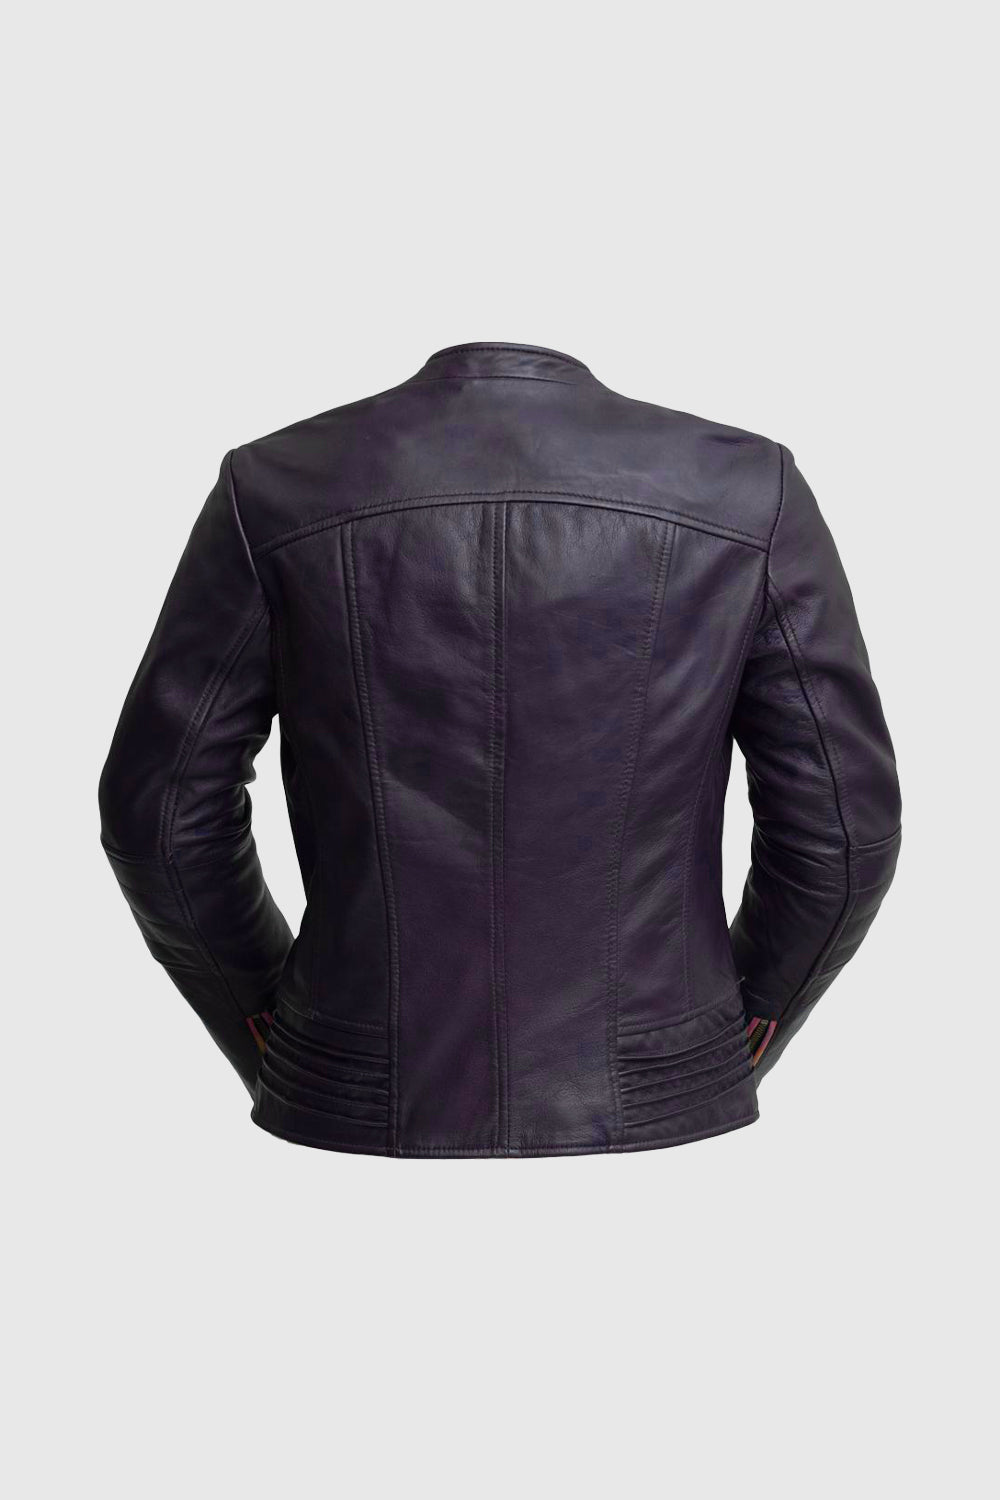 Trish Womens Leather Jacket (Violet)